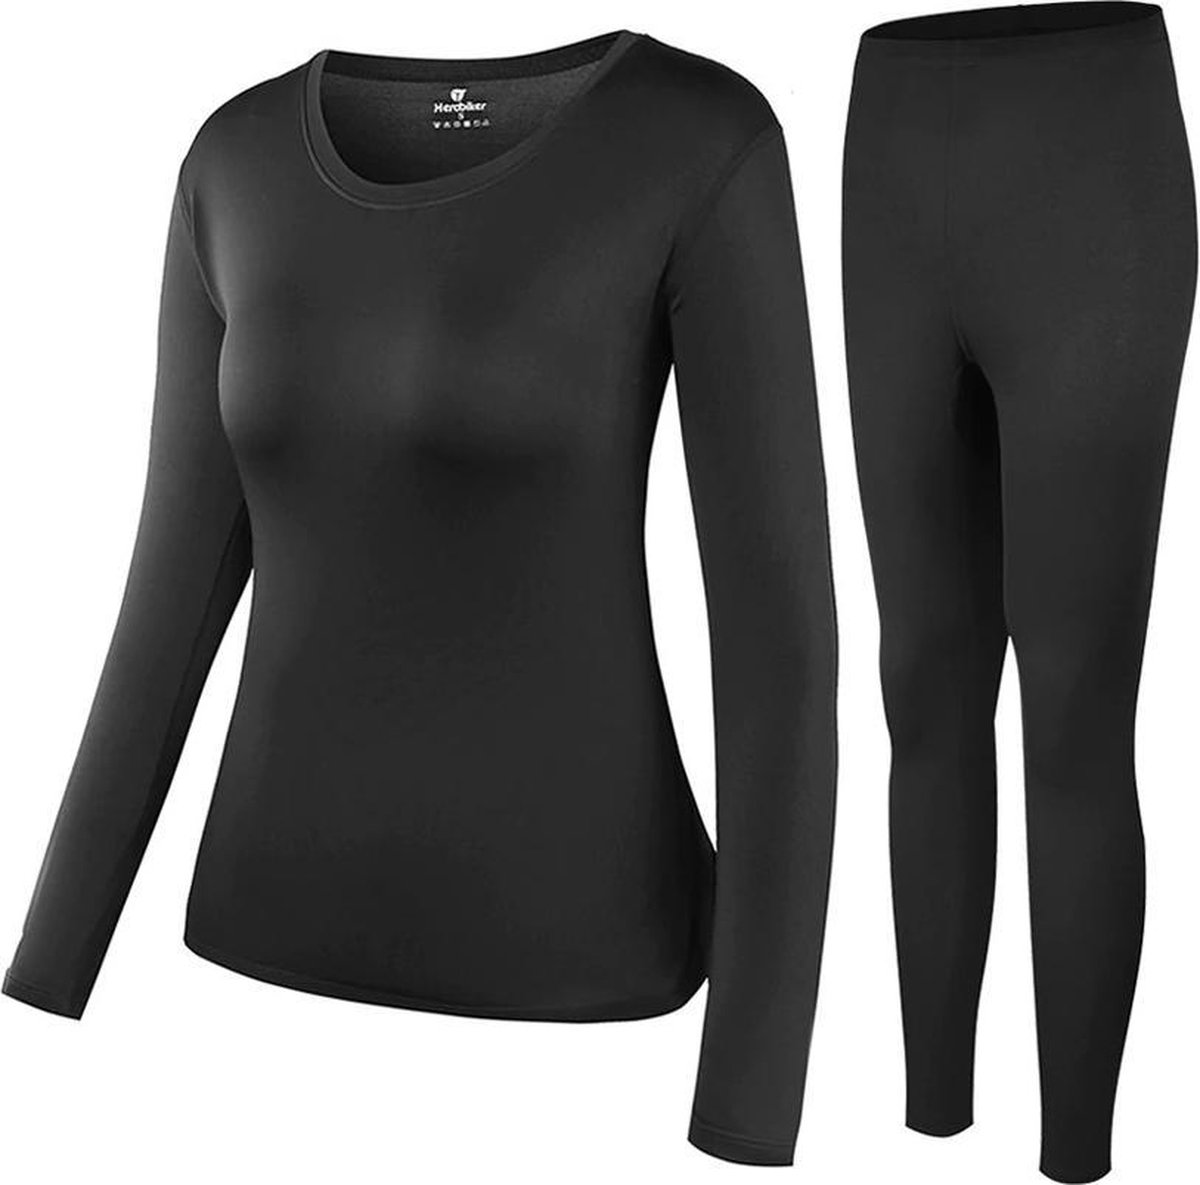 Fietskleding - Motorkleding - Skikleding - Dames - Broek & Shirt Set - Thermo Compressie Fleece Onderkleding - Zwart - Maat XL - Merkloos